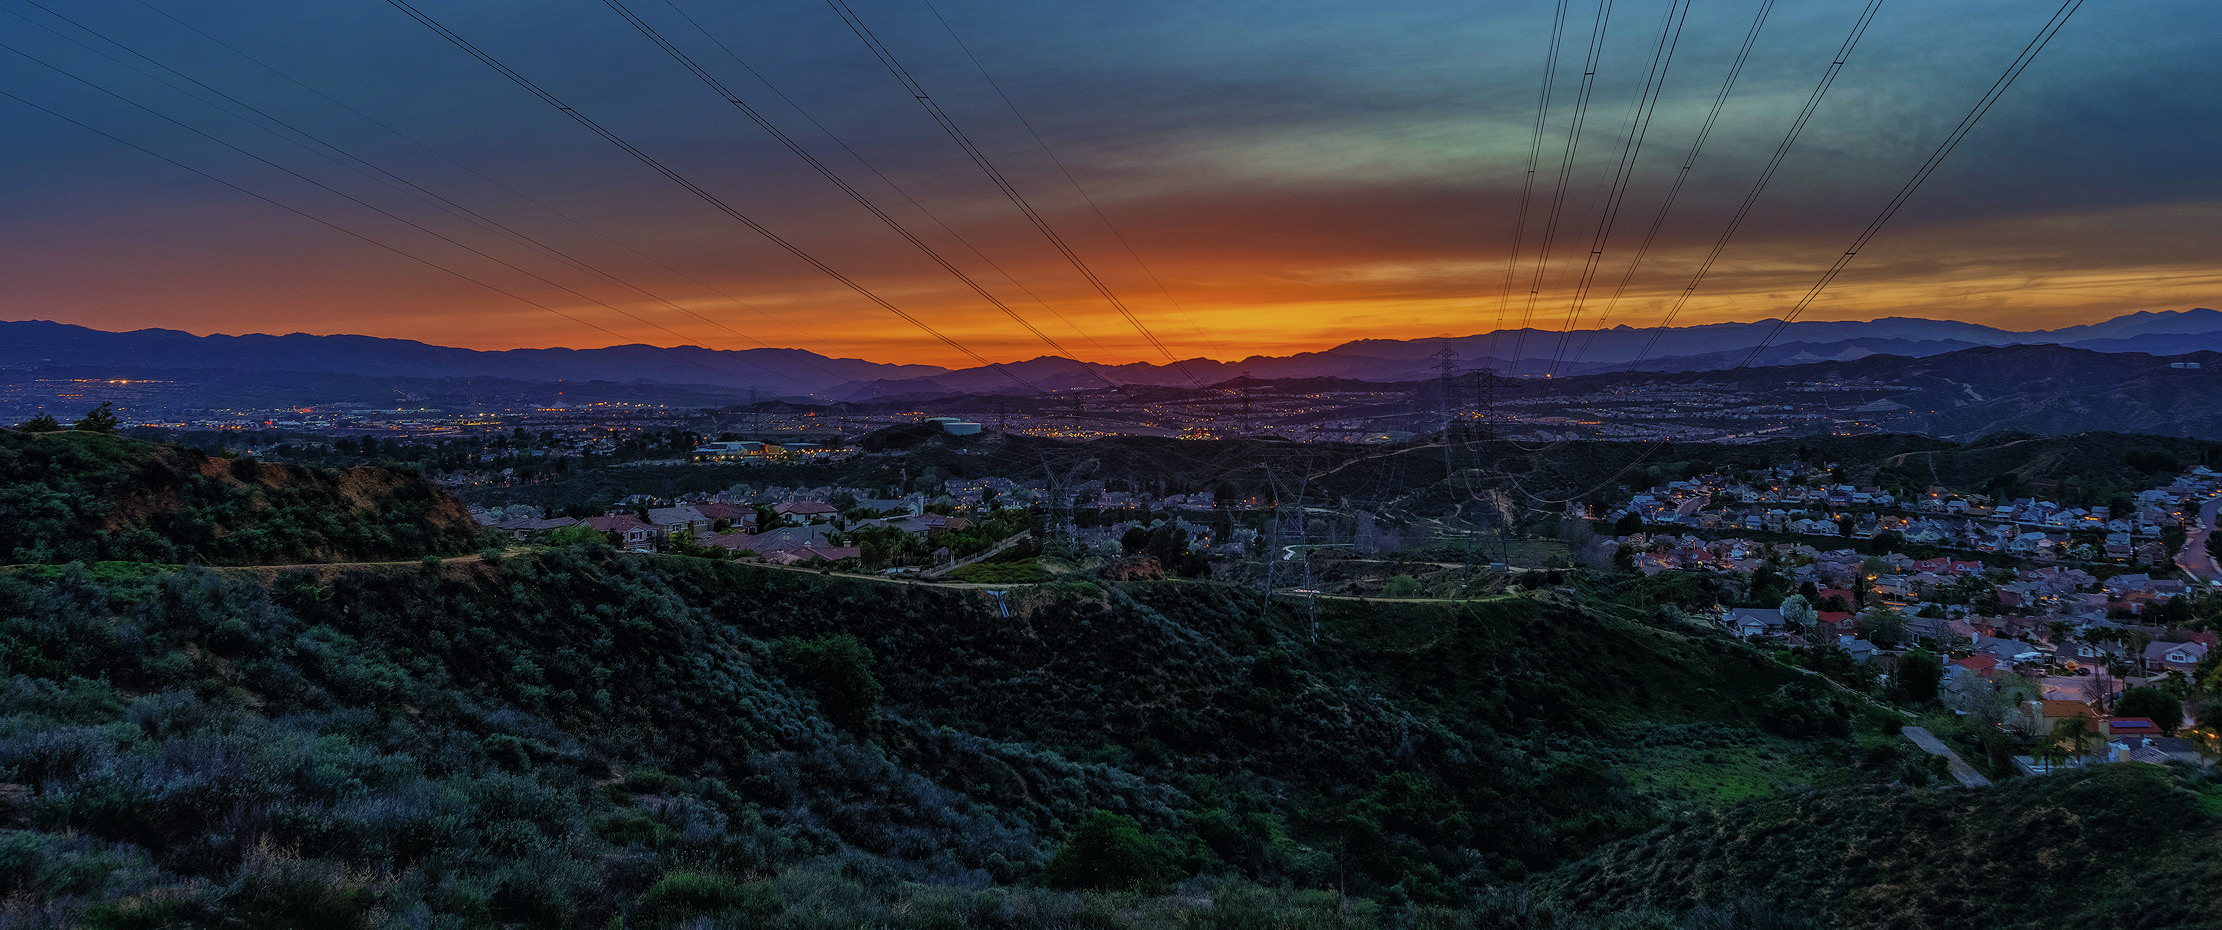 sunset in santa clarita, california